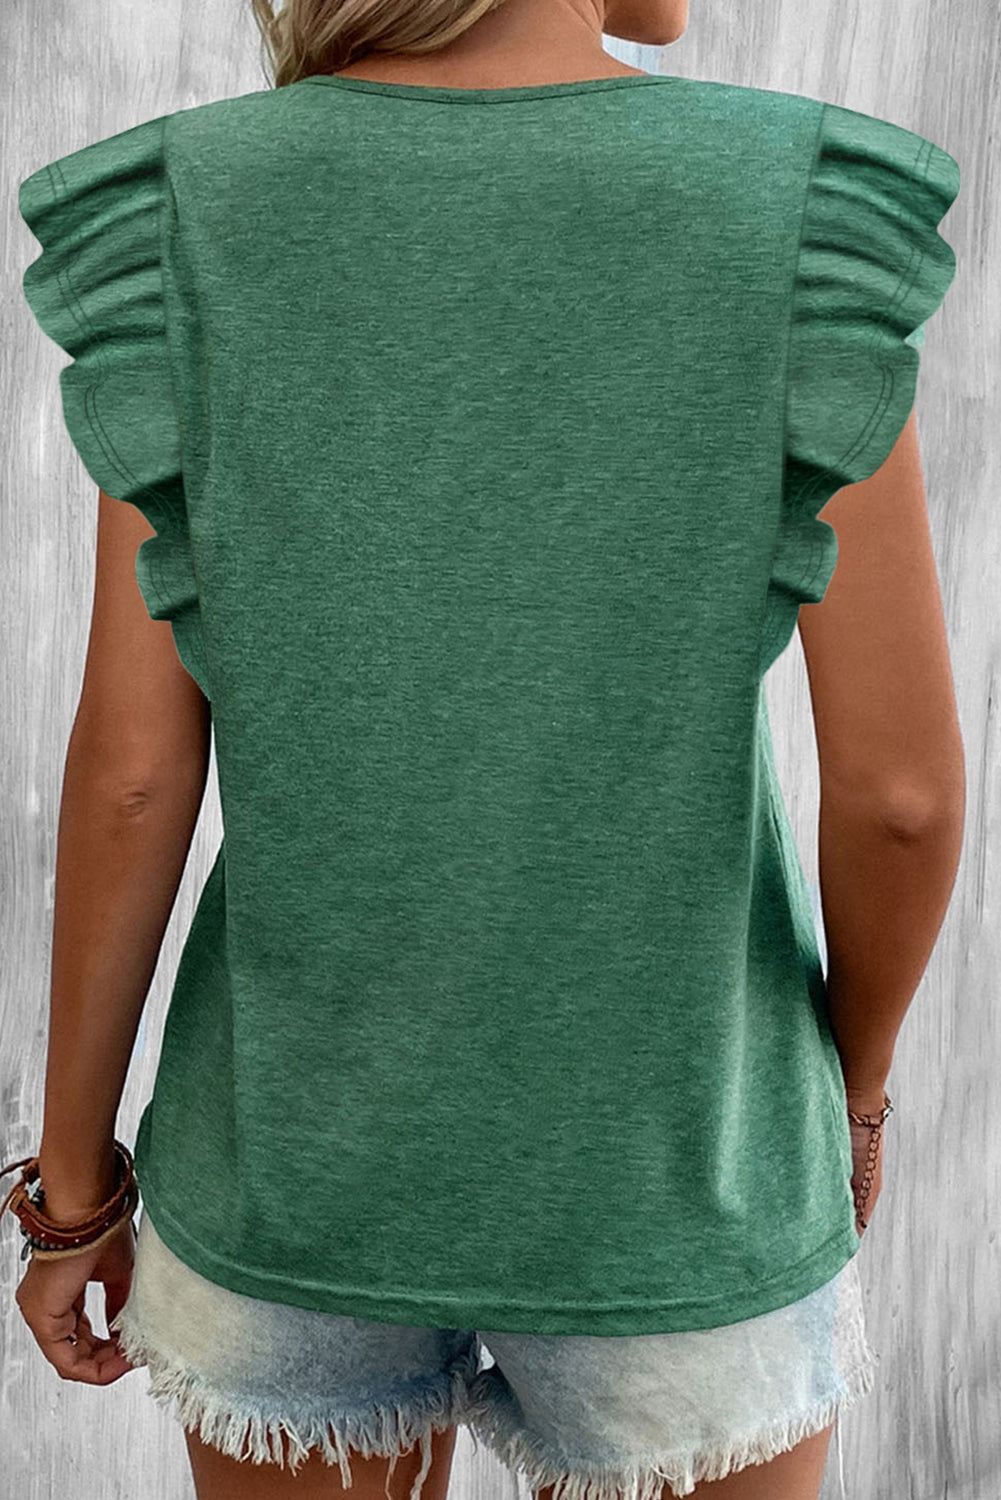 Green Solid Color Ruffle Sleeveless V Neck T Shirt